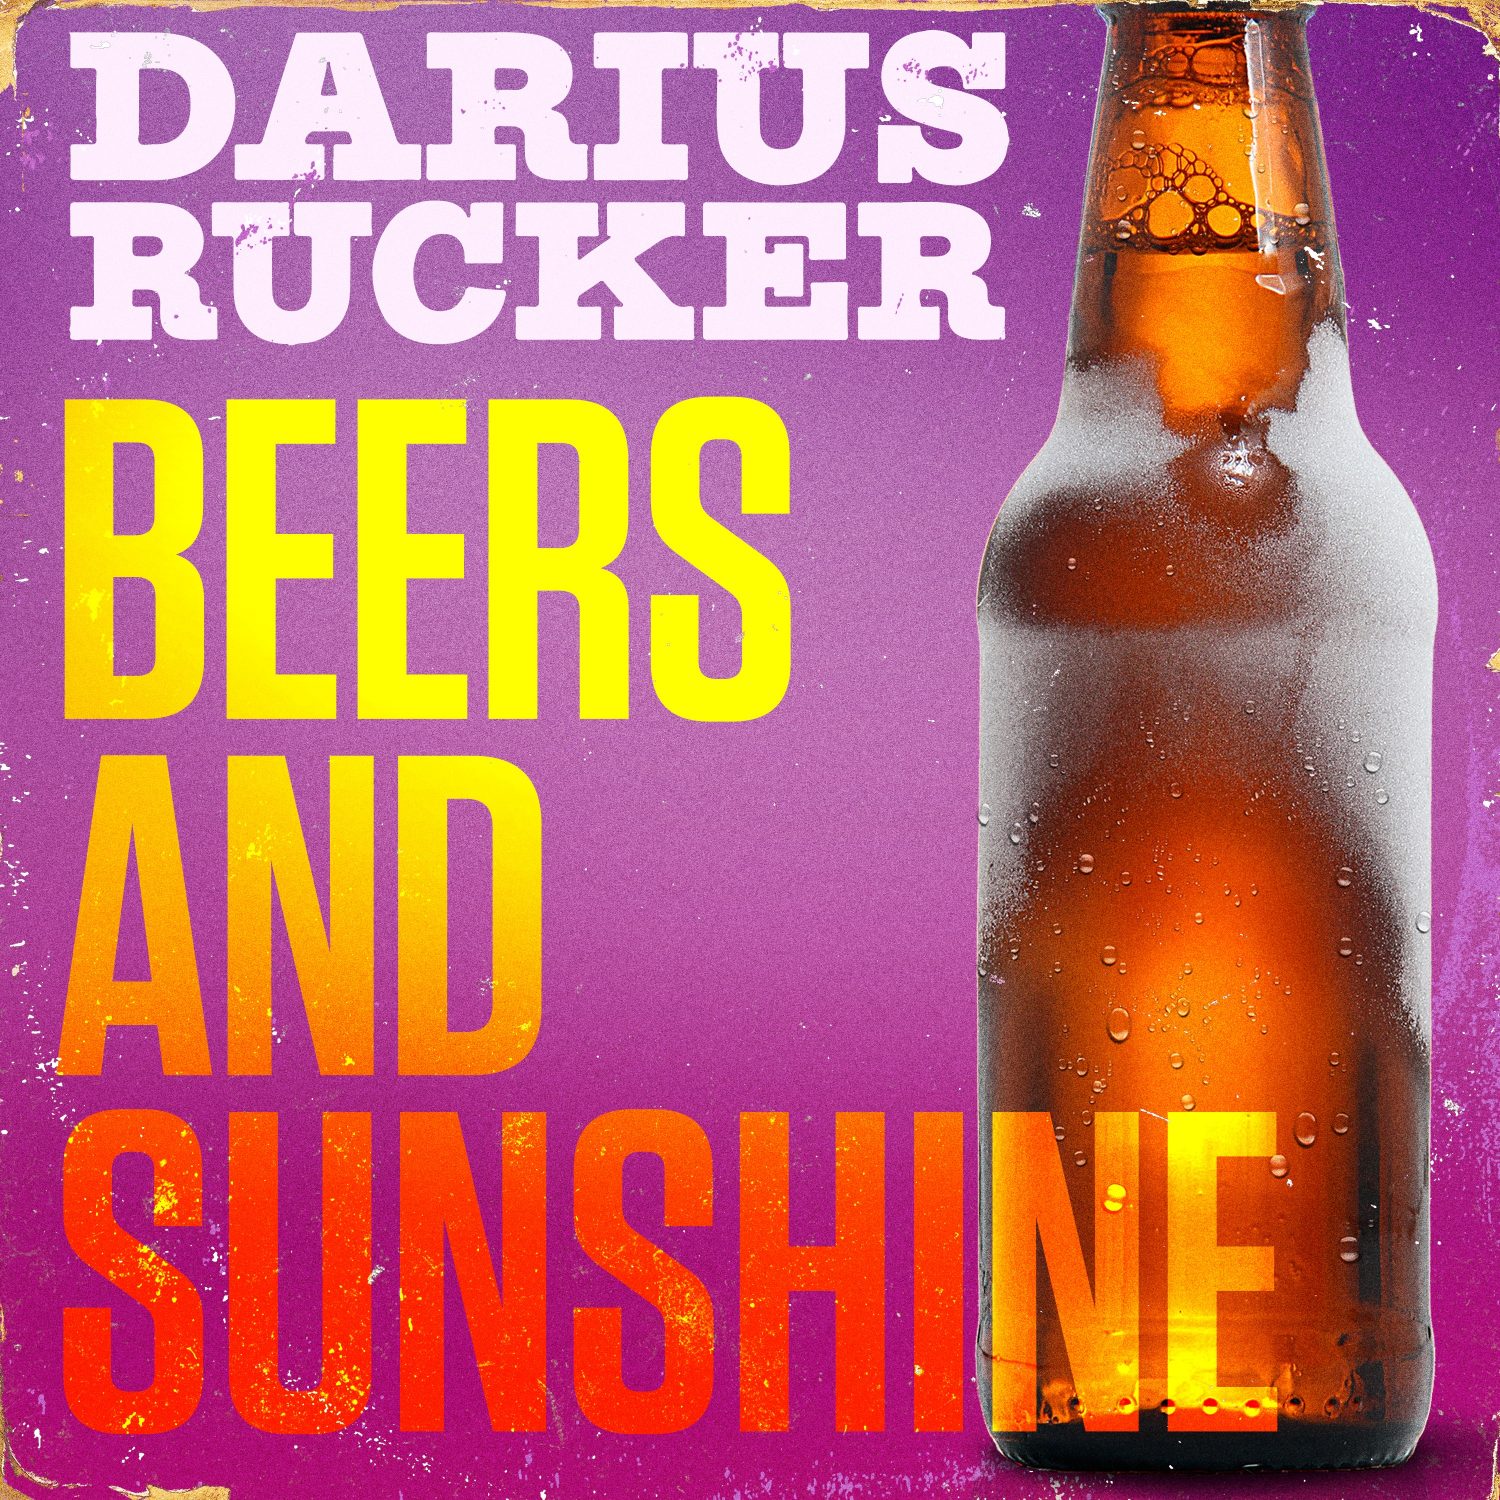 Darius Rucker’s New Single 'Beers And Sunshine' Provides Positivity